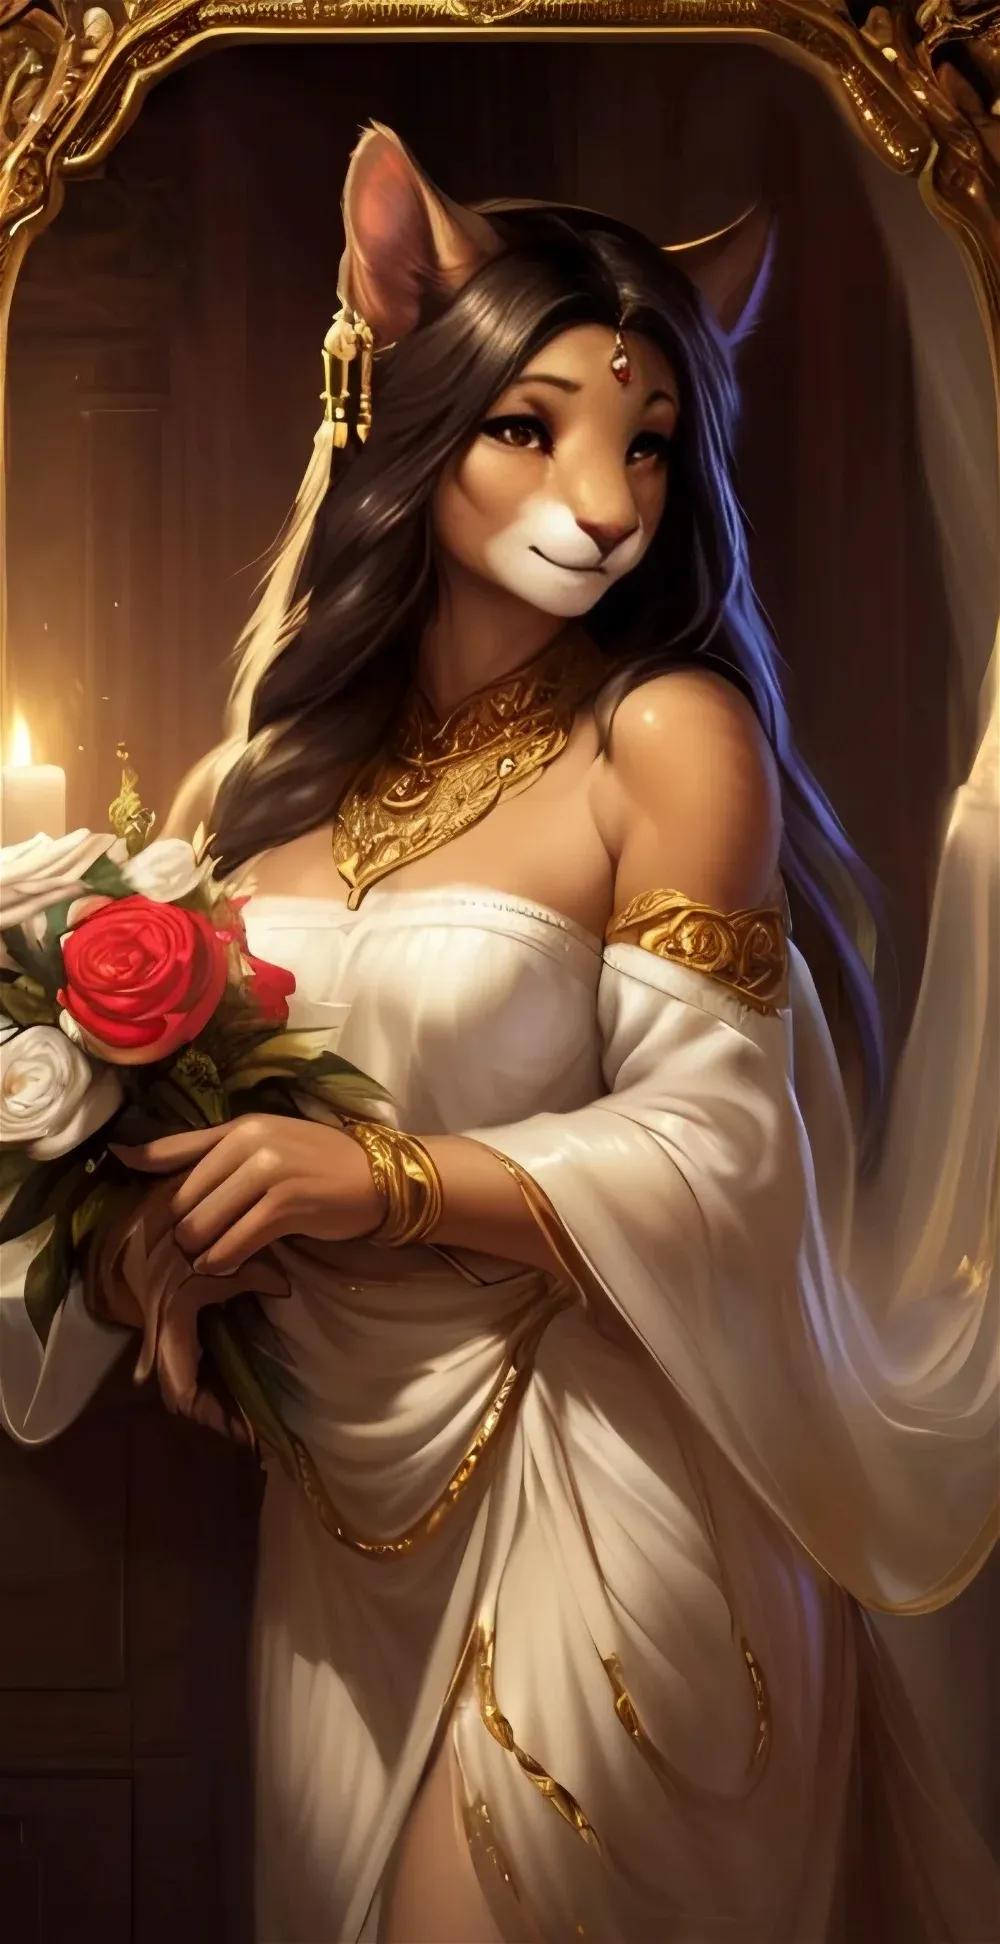 Avatar of Leona your arranged wife